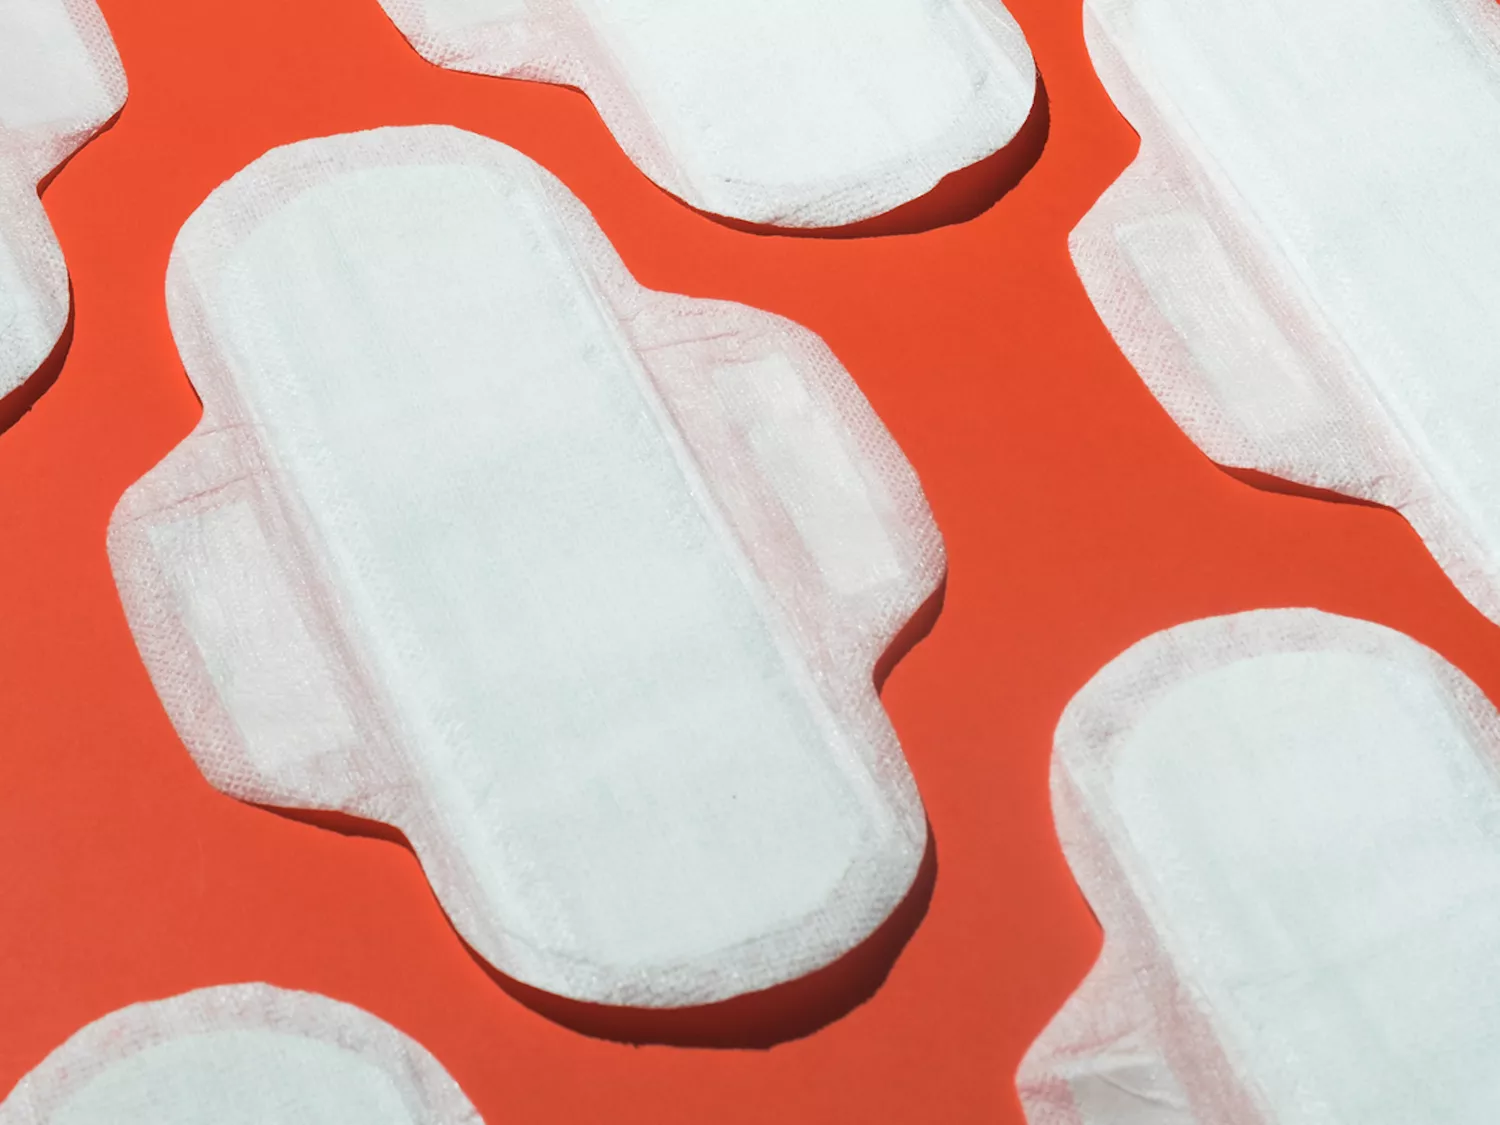 Several clean white menstrual pads on orange background